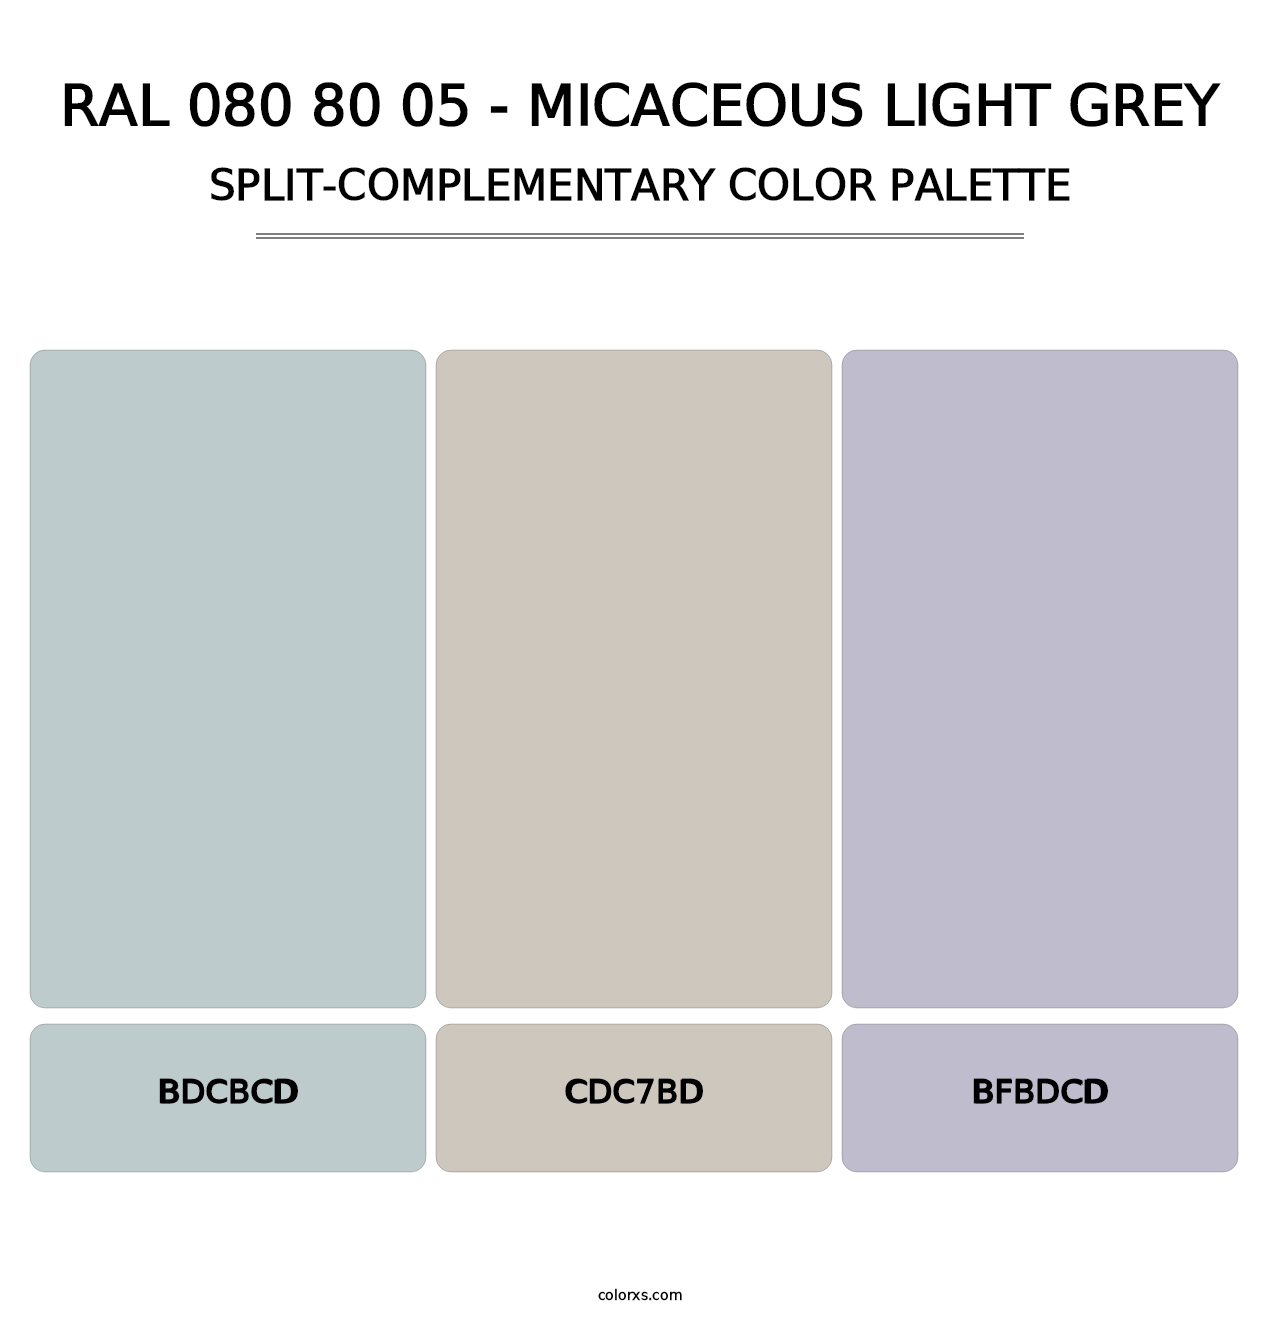 RAL 080 80 05 - Micaceous Light Grey - Split-Complementary Color Palette